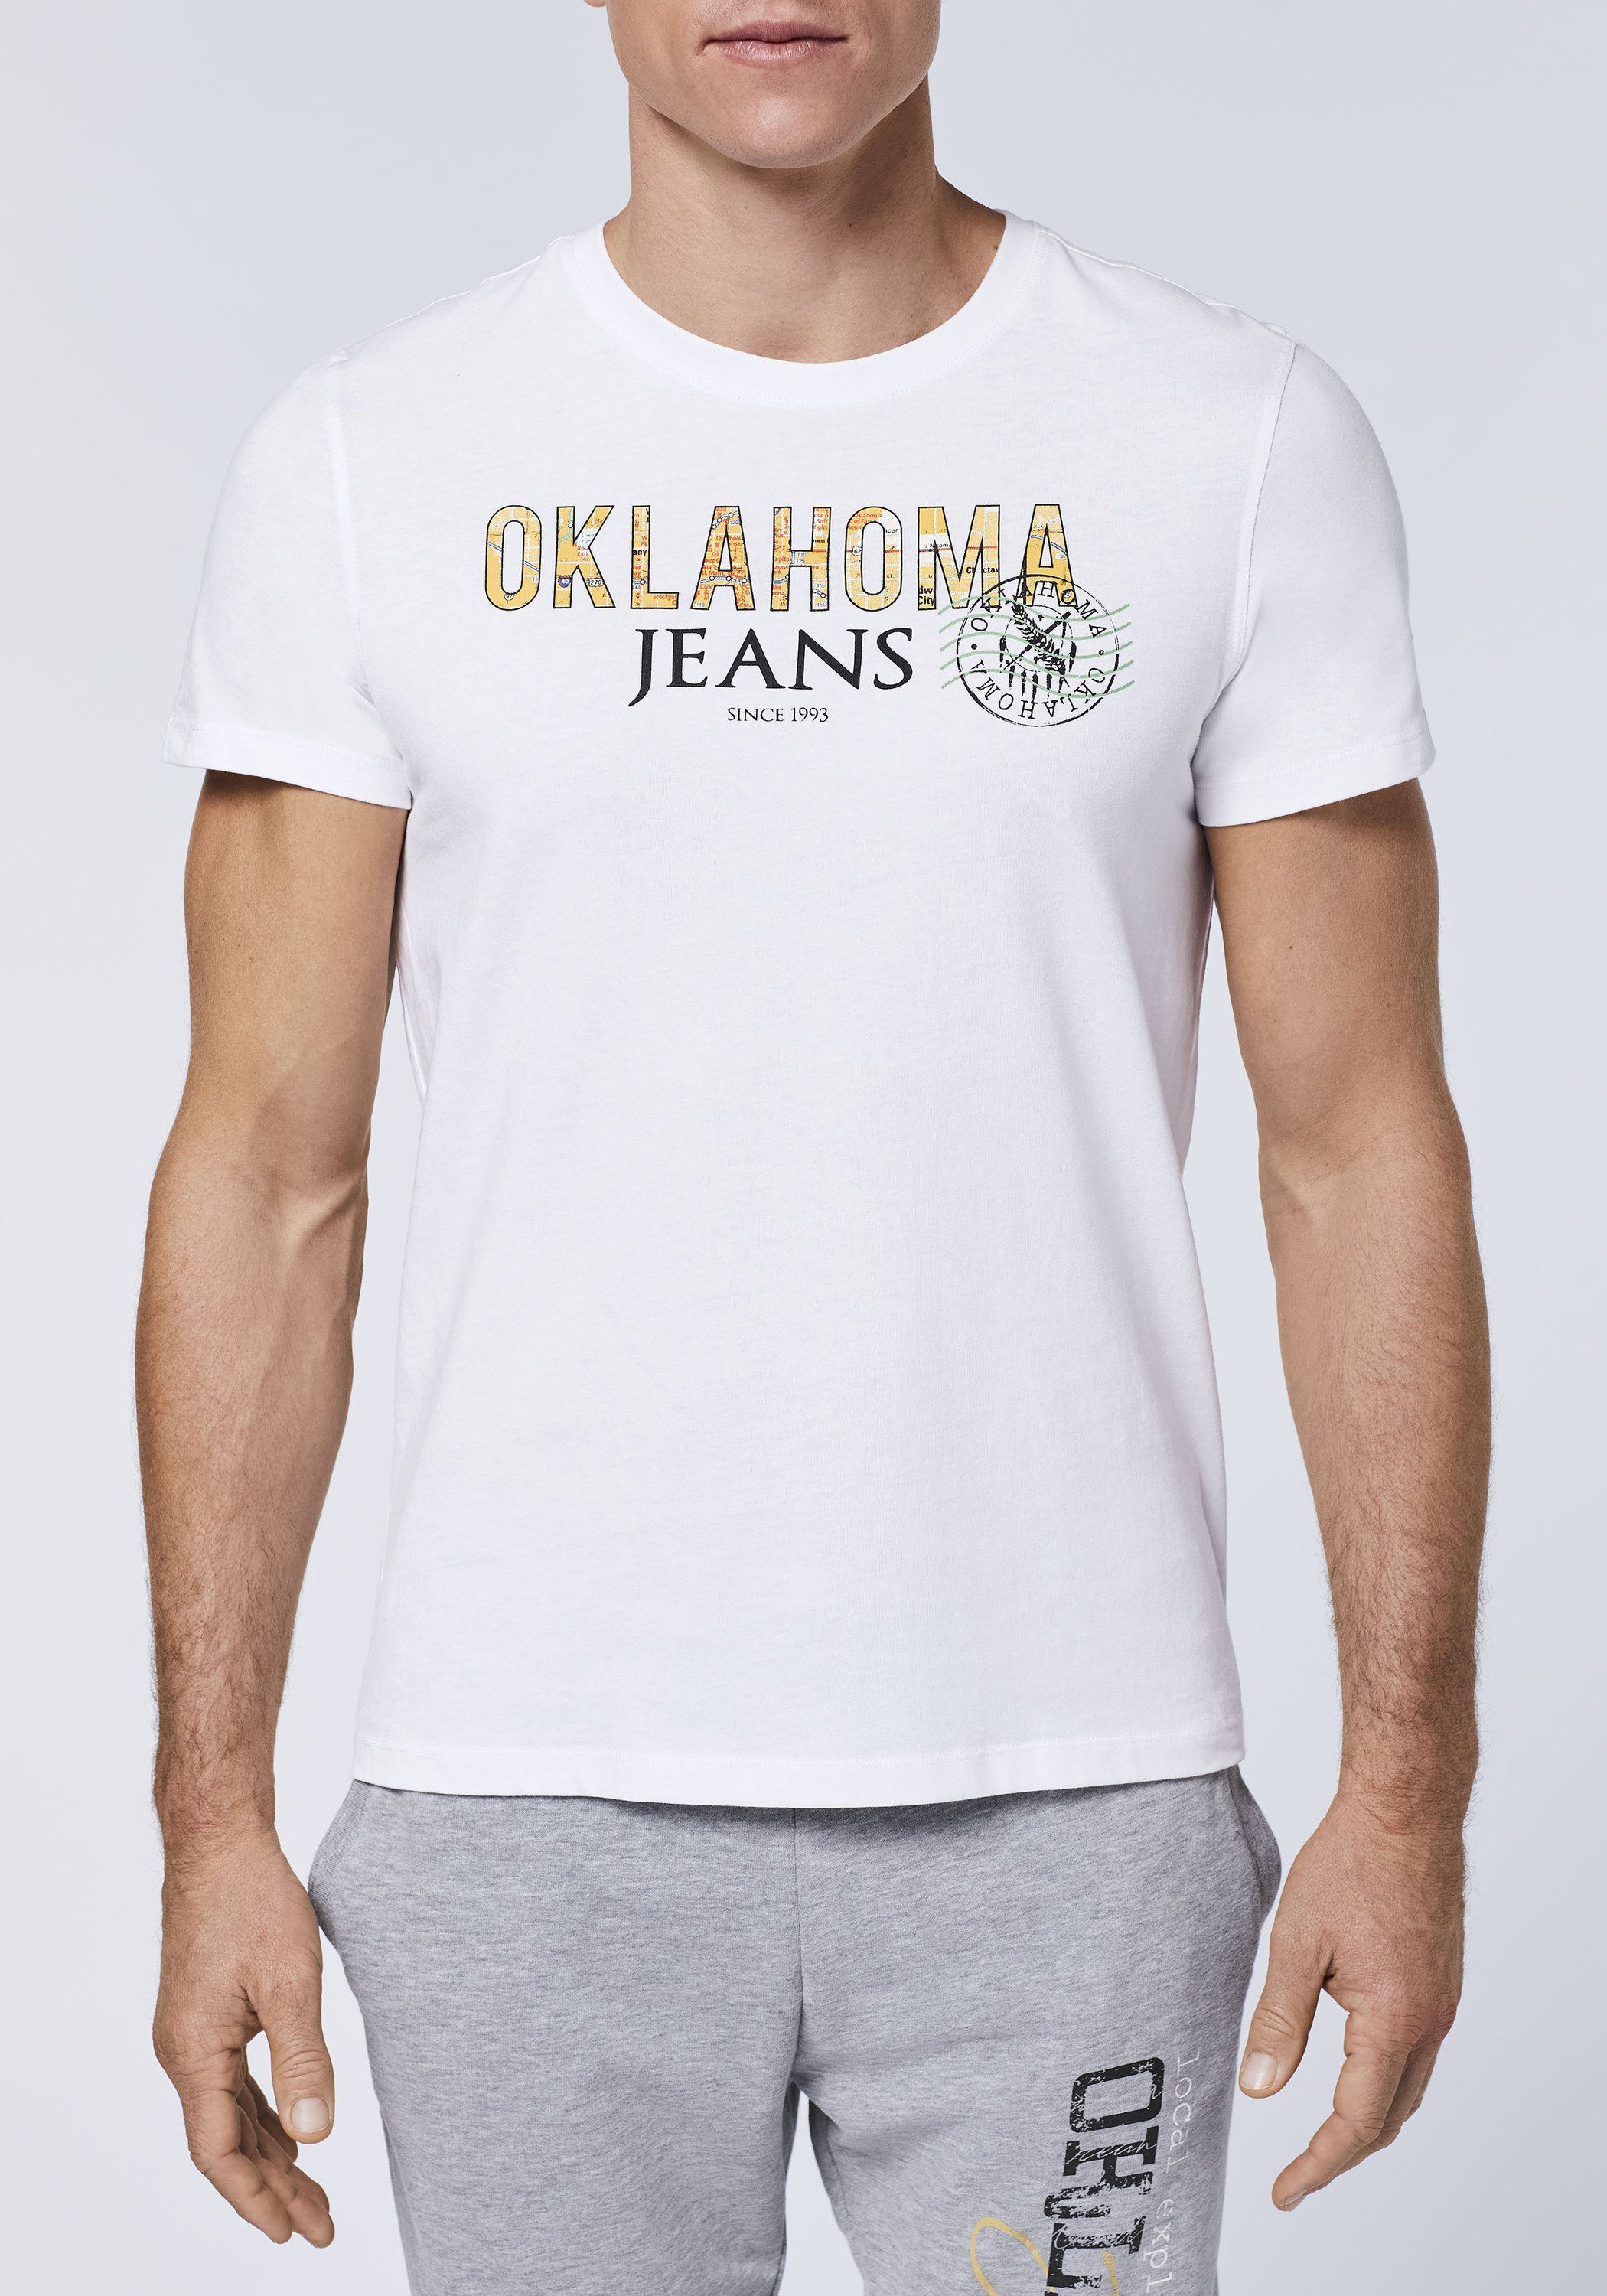 Oklahoma White im 11-0601 City-Map-Look mit Print-Shirt Bright Jeans Label-Print